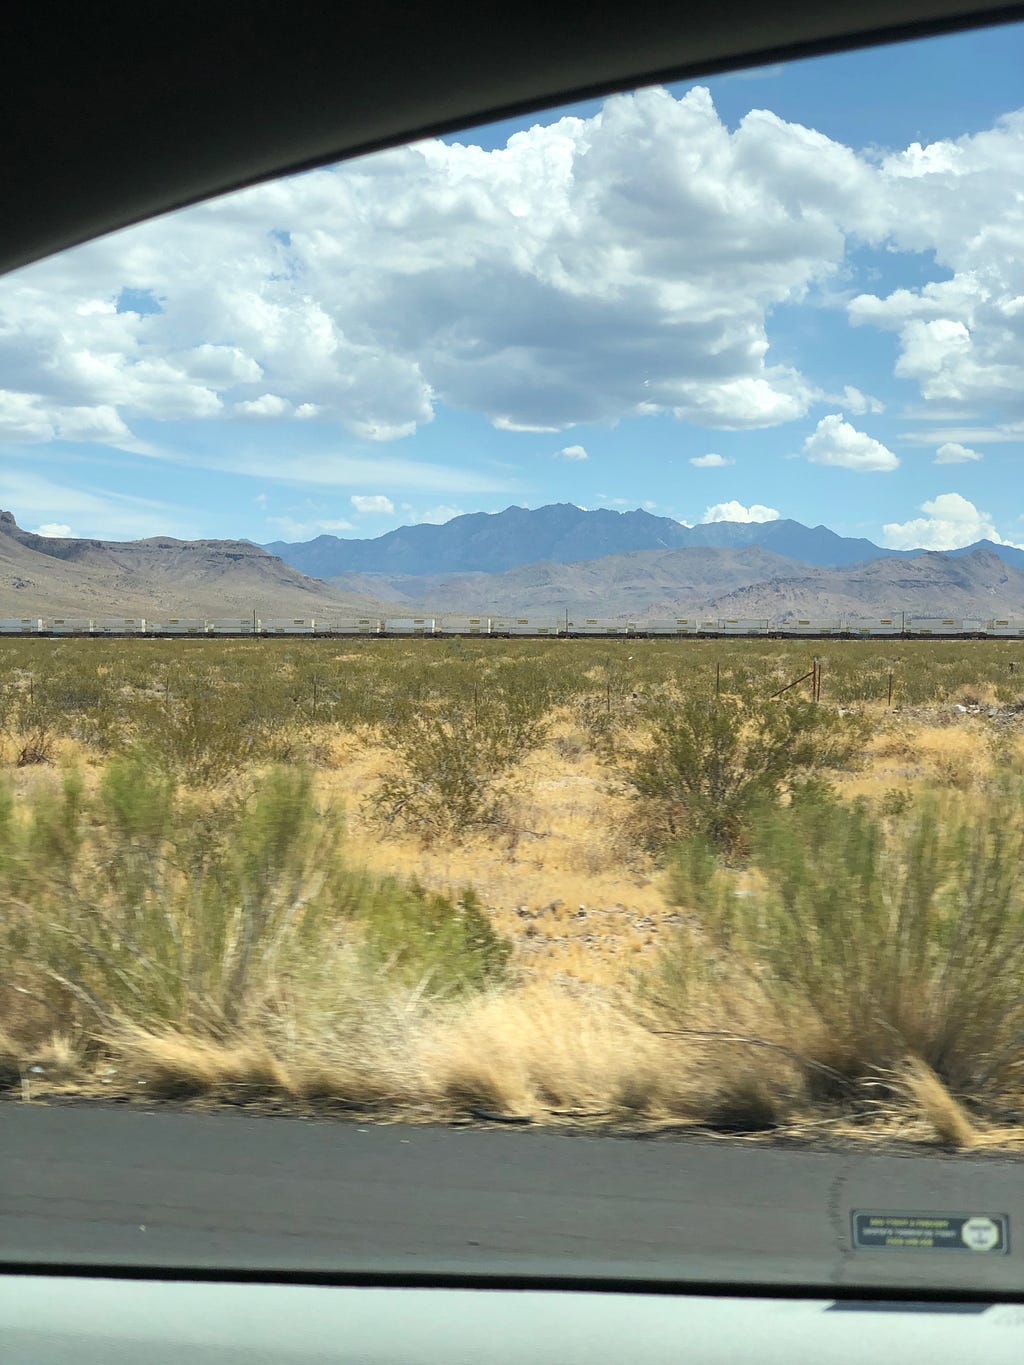 Picture of the Arizona desert and mountains taken through a car window.